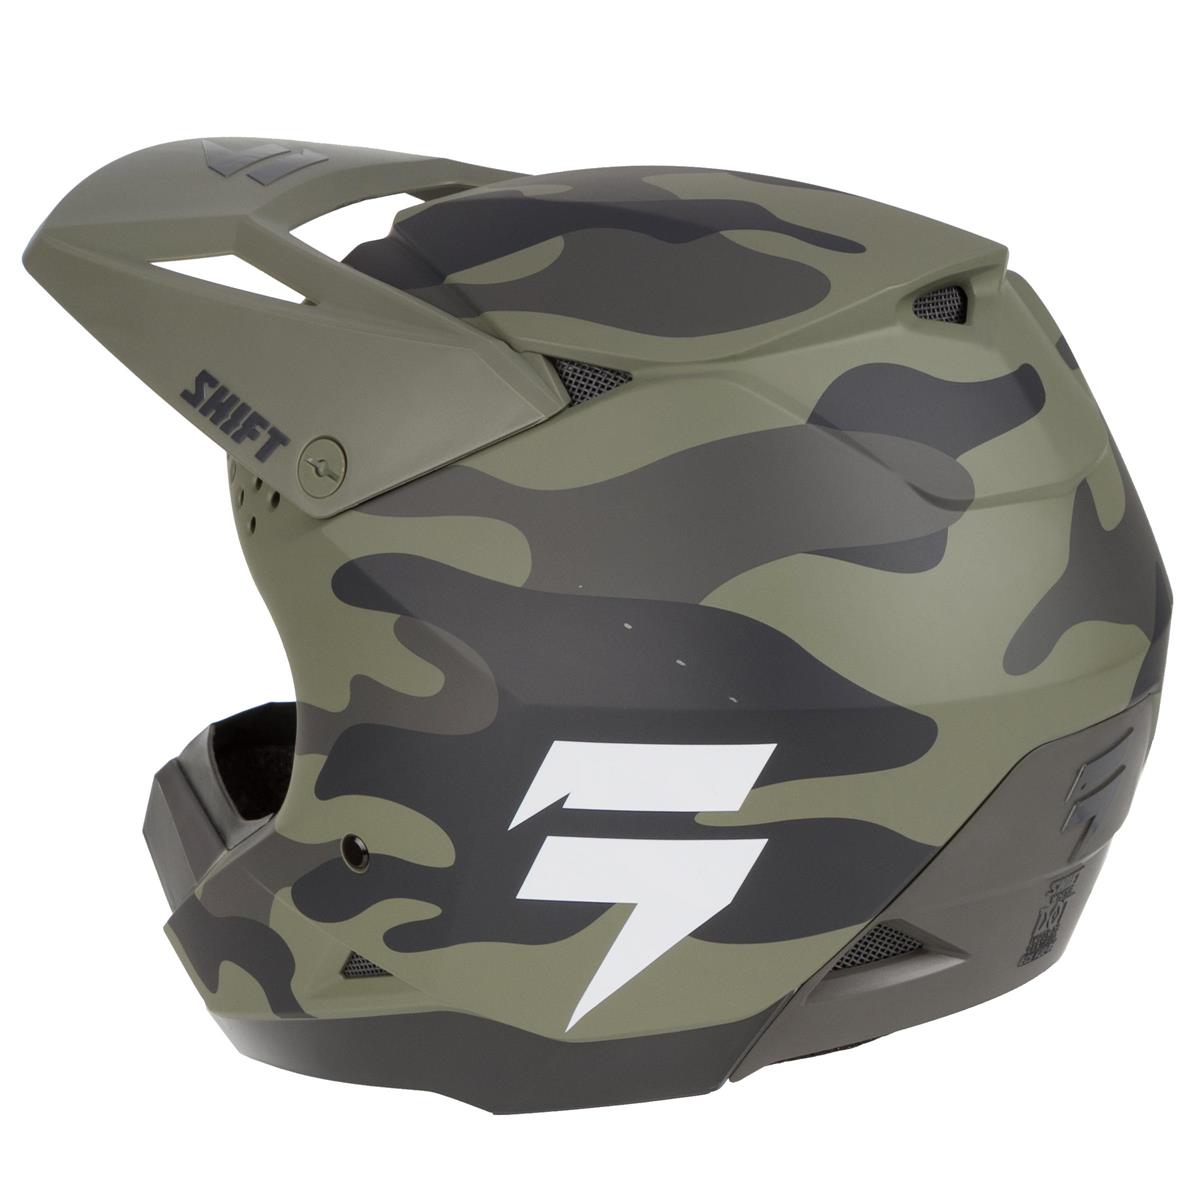 2019 Shift Racing MX Whit3 Label Mens Helmet Camo ATV Off Road Motocross Enduro